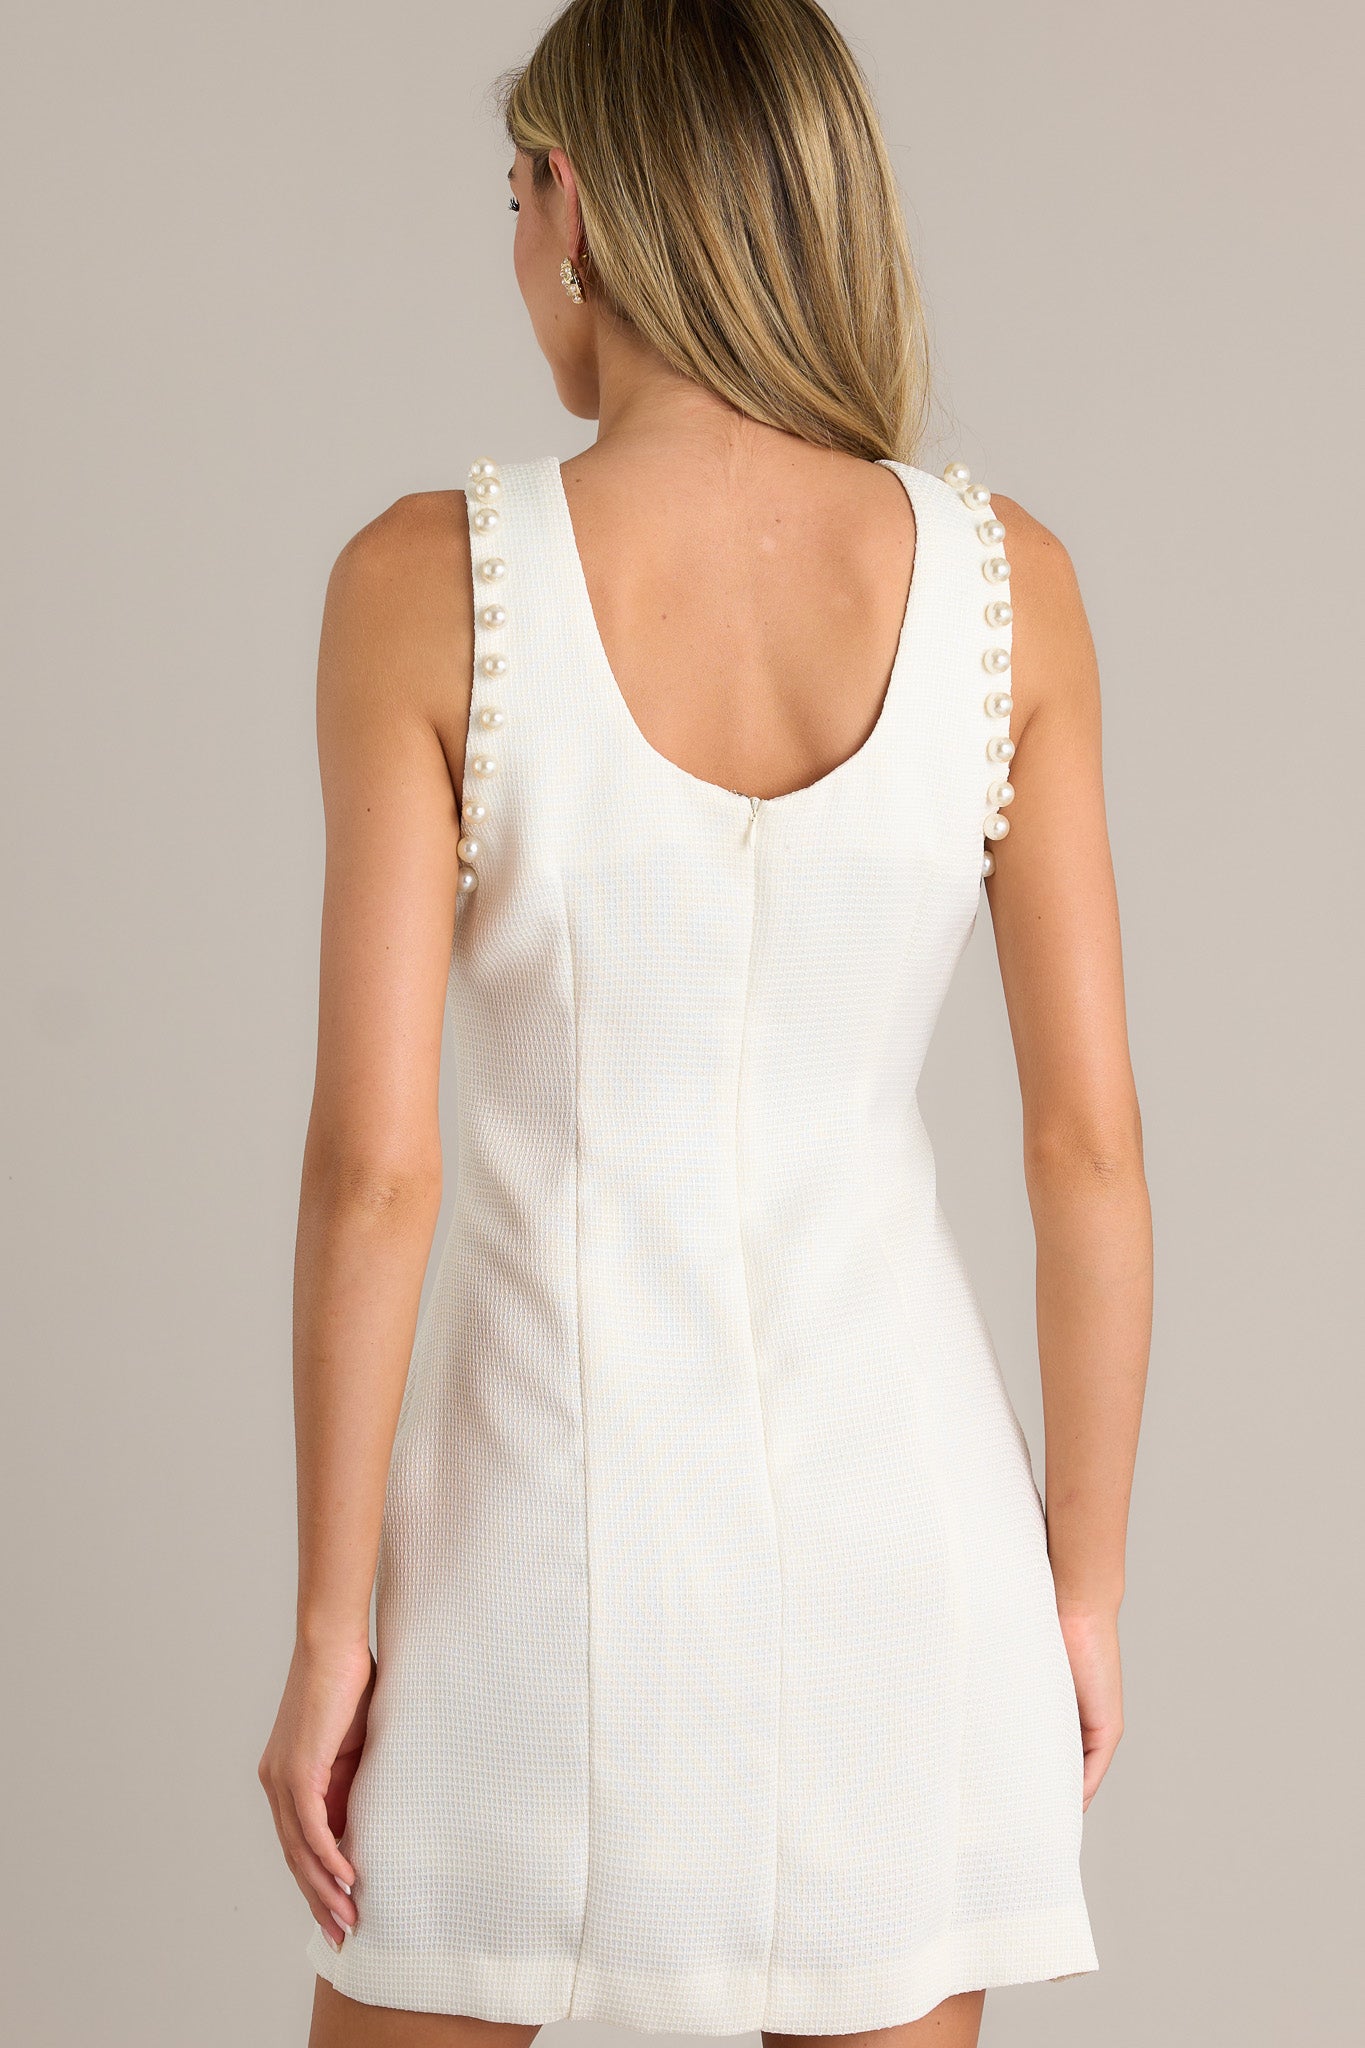 Elegance Unveiled Ivory Pearl Mini Dress